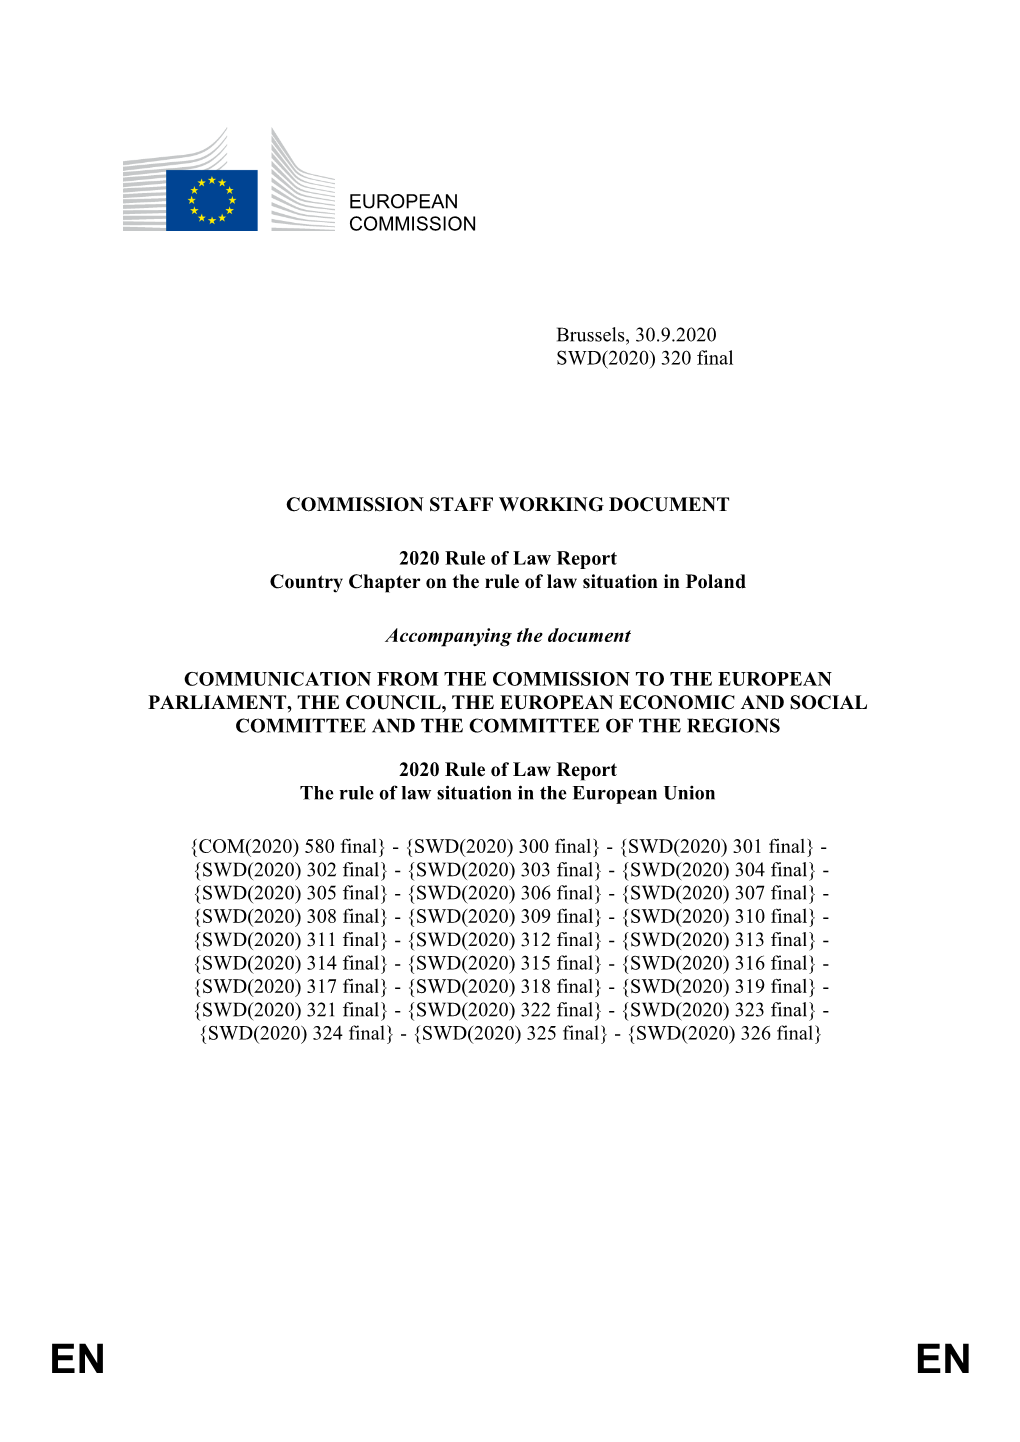 EUROPEAN COMMISSION Brussels, 30.9.2020 SWD(2020) 320 Final